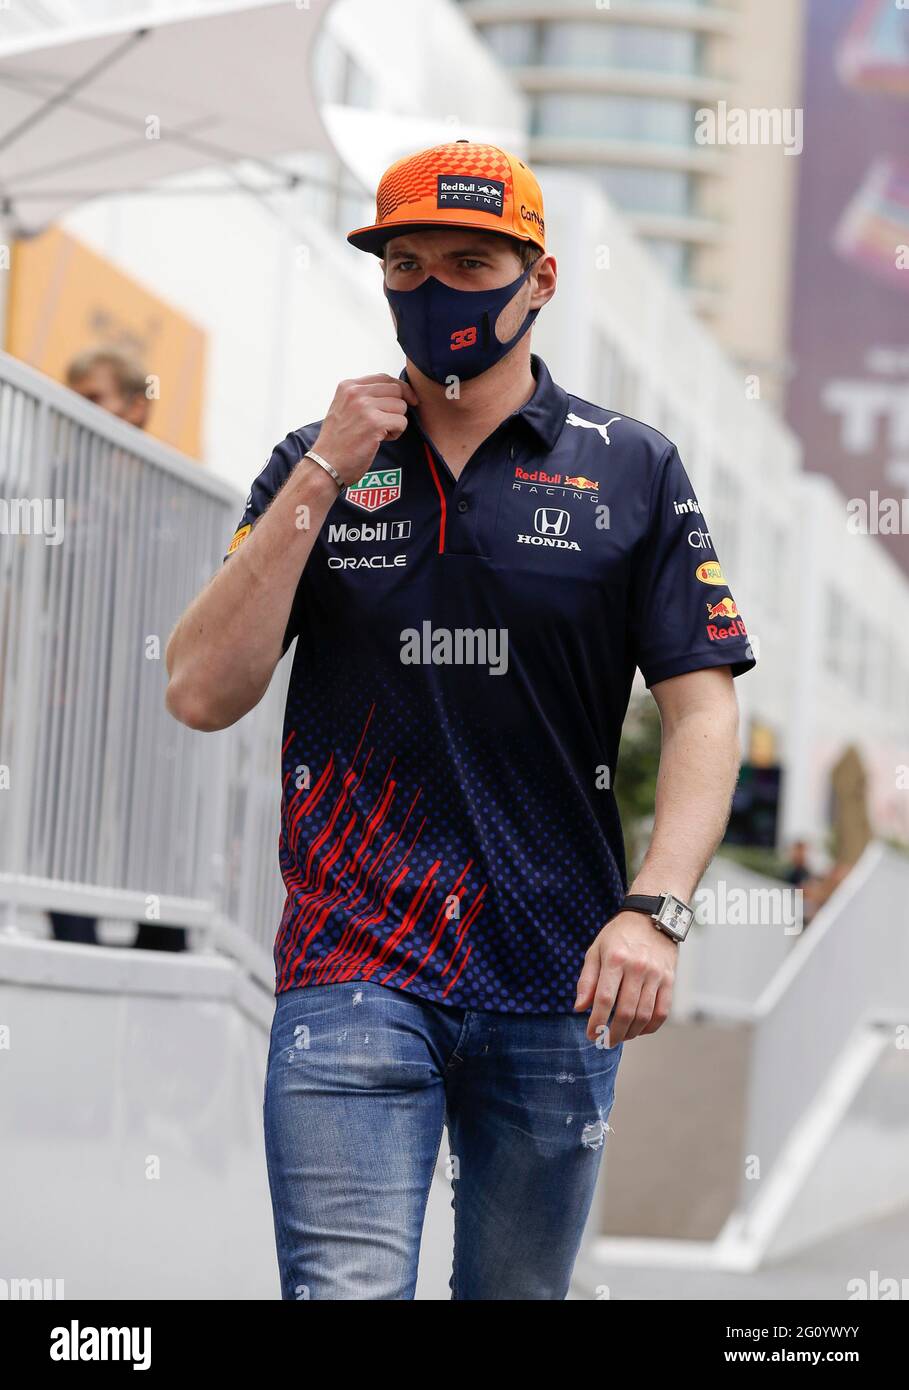 Baku, Azerbaijan. 4th June, 2021. # 33 Max Verstappen (NED, Red Bull  Racing), F1 Grand Prix of Azerbaijan at Baku City Circuit on June 4, 2021  in Baku, Azerbaijan. (Photo by HOCH